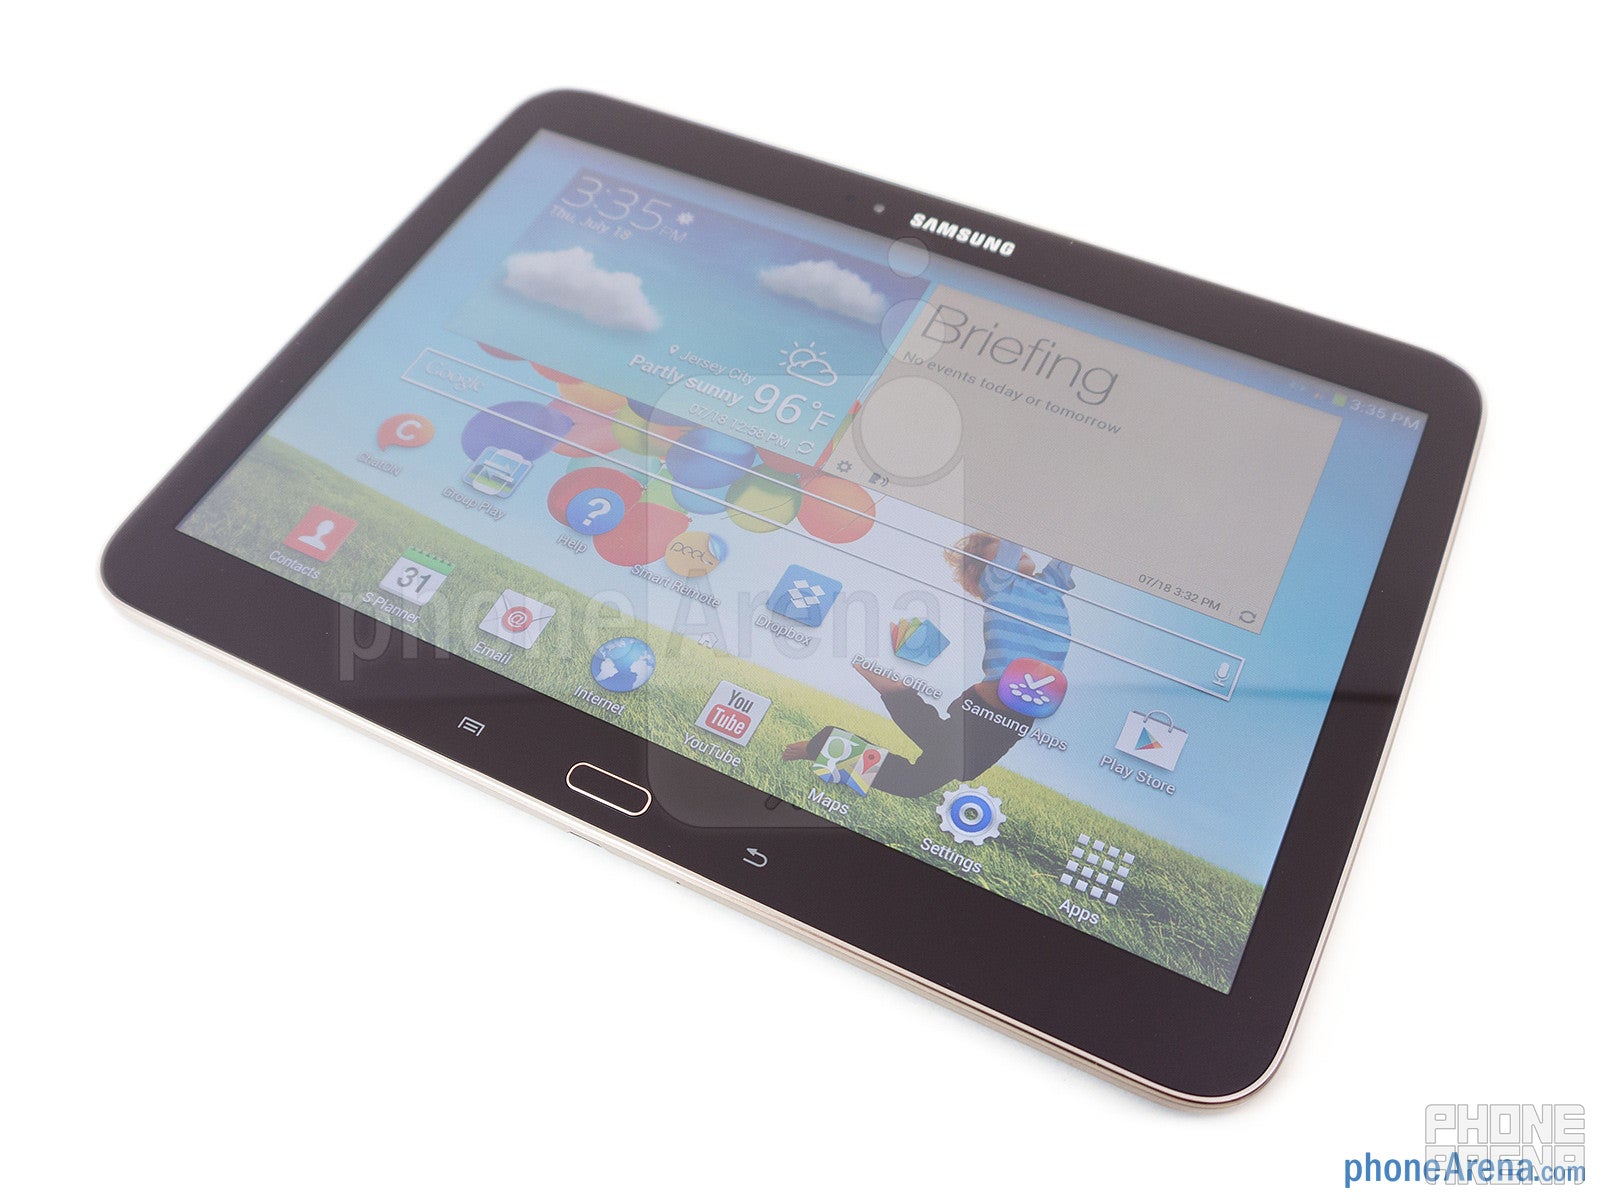 Samsung Galaxy Tab 3 10.1 Review